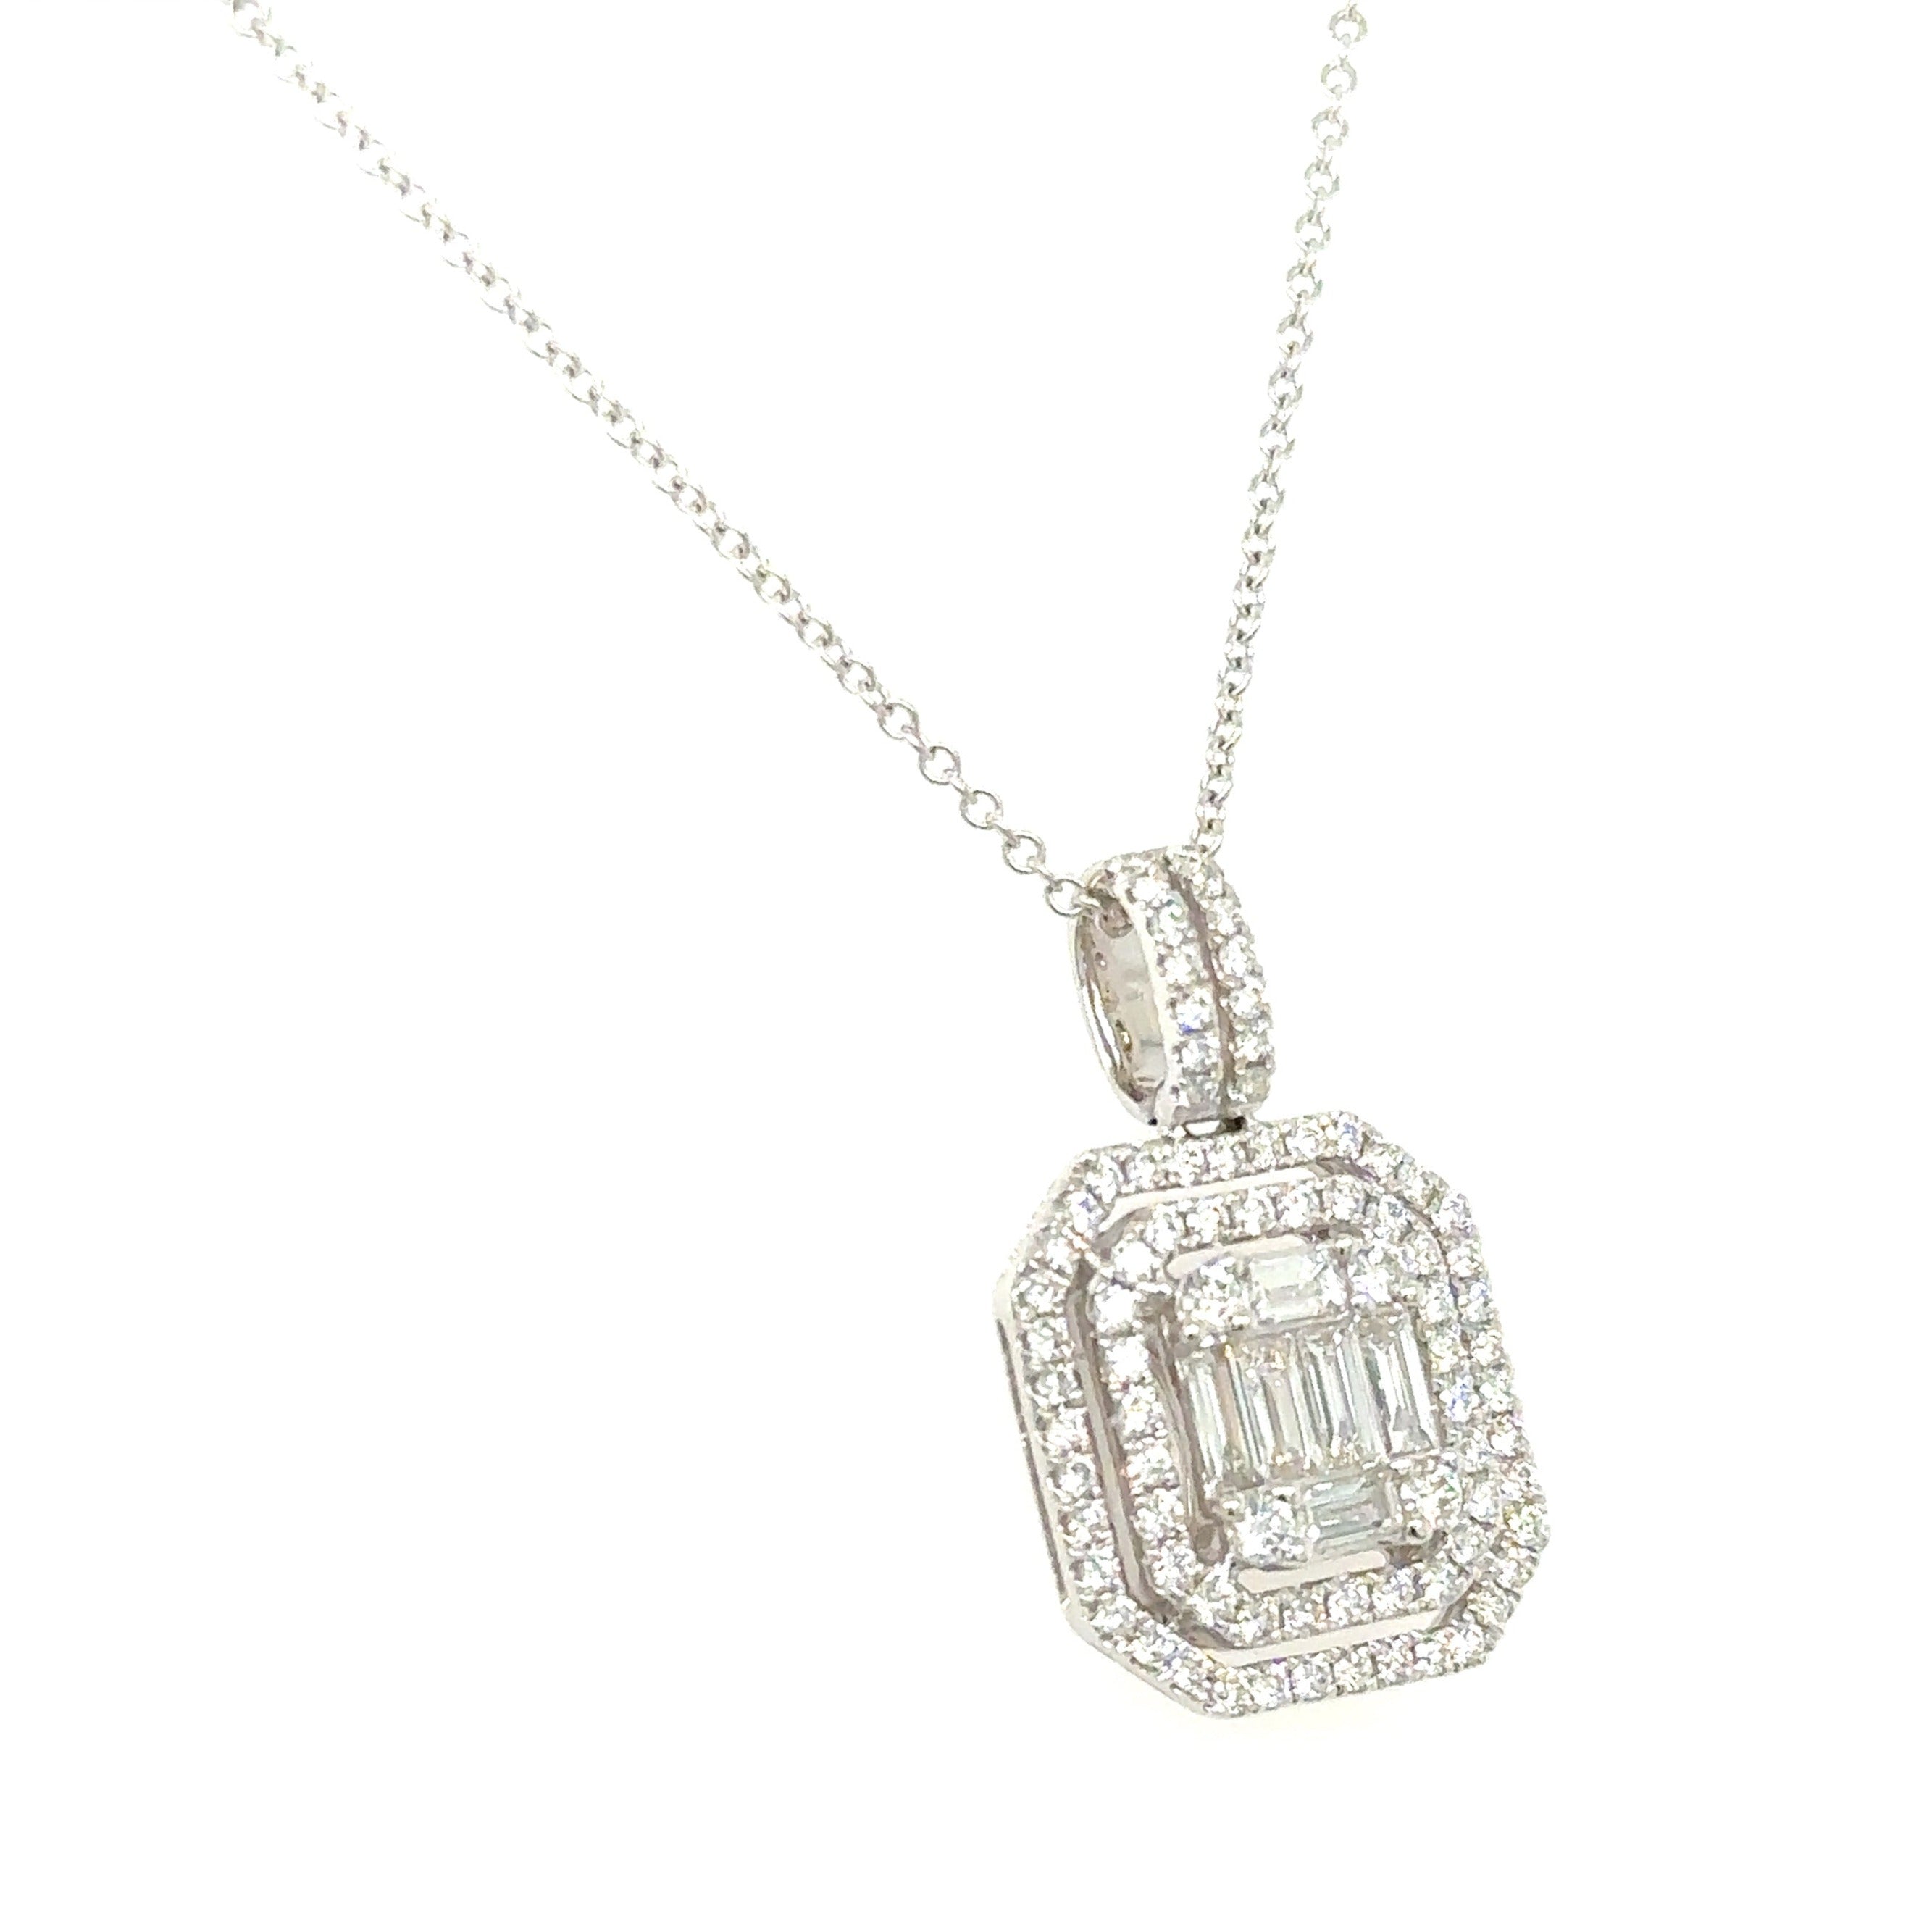 0.83ct tw Emerald Cut Double Halo Diamond Pendant Necklace